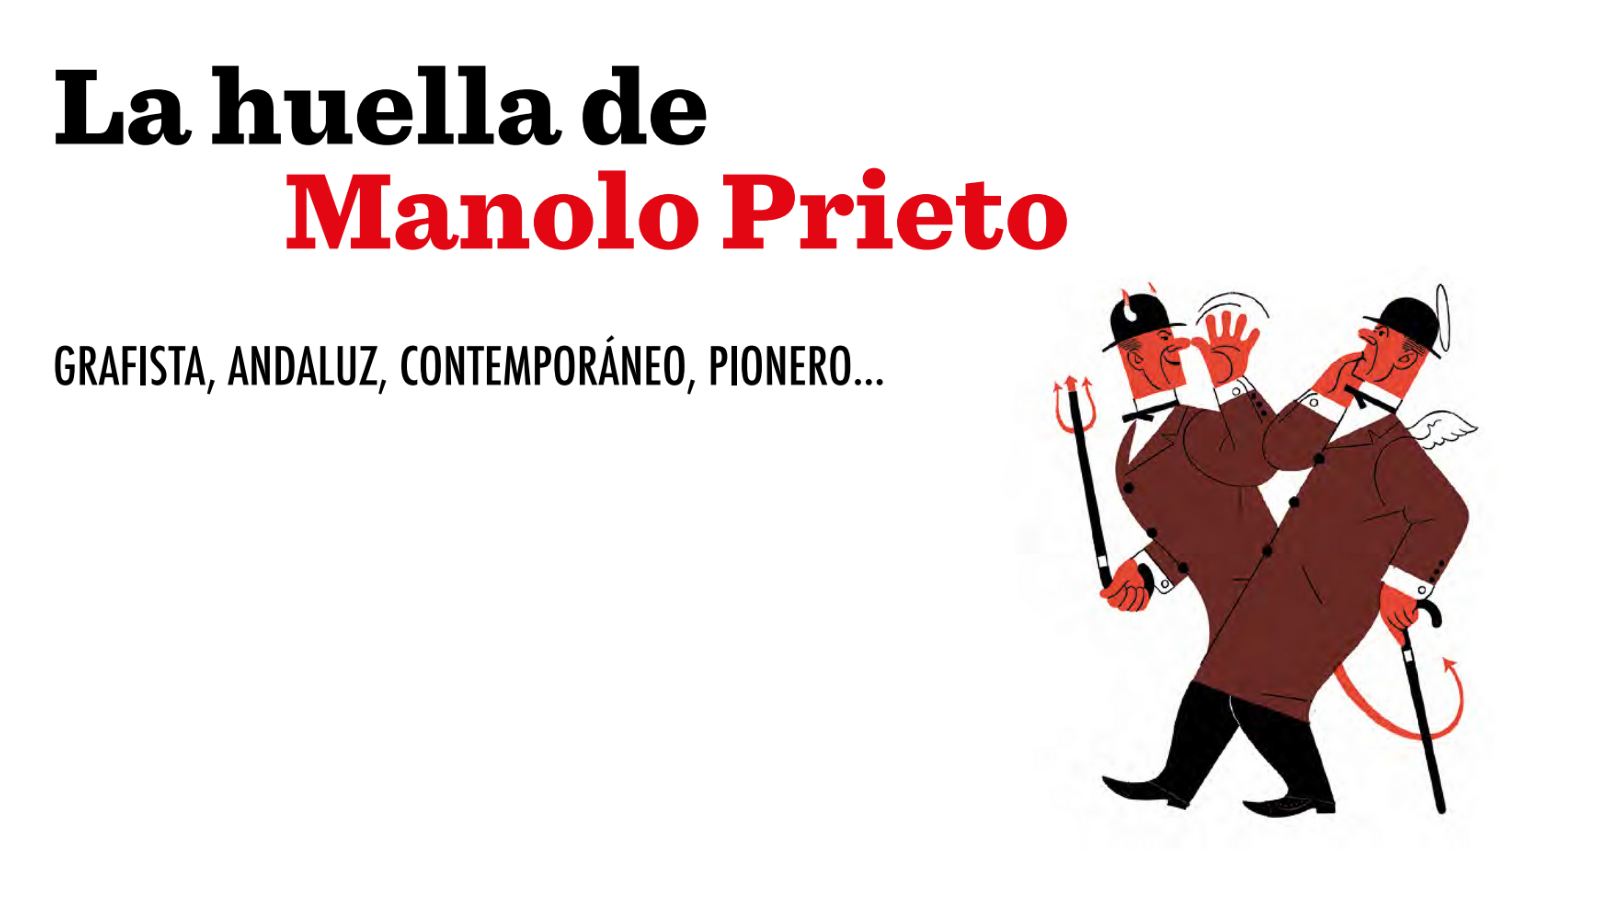 La huella de Manolo Prieto. Grafista, andaluz, contemporáneo, pionero...